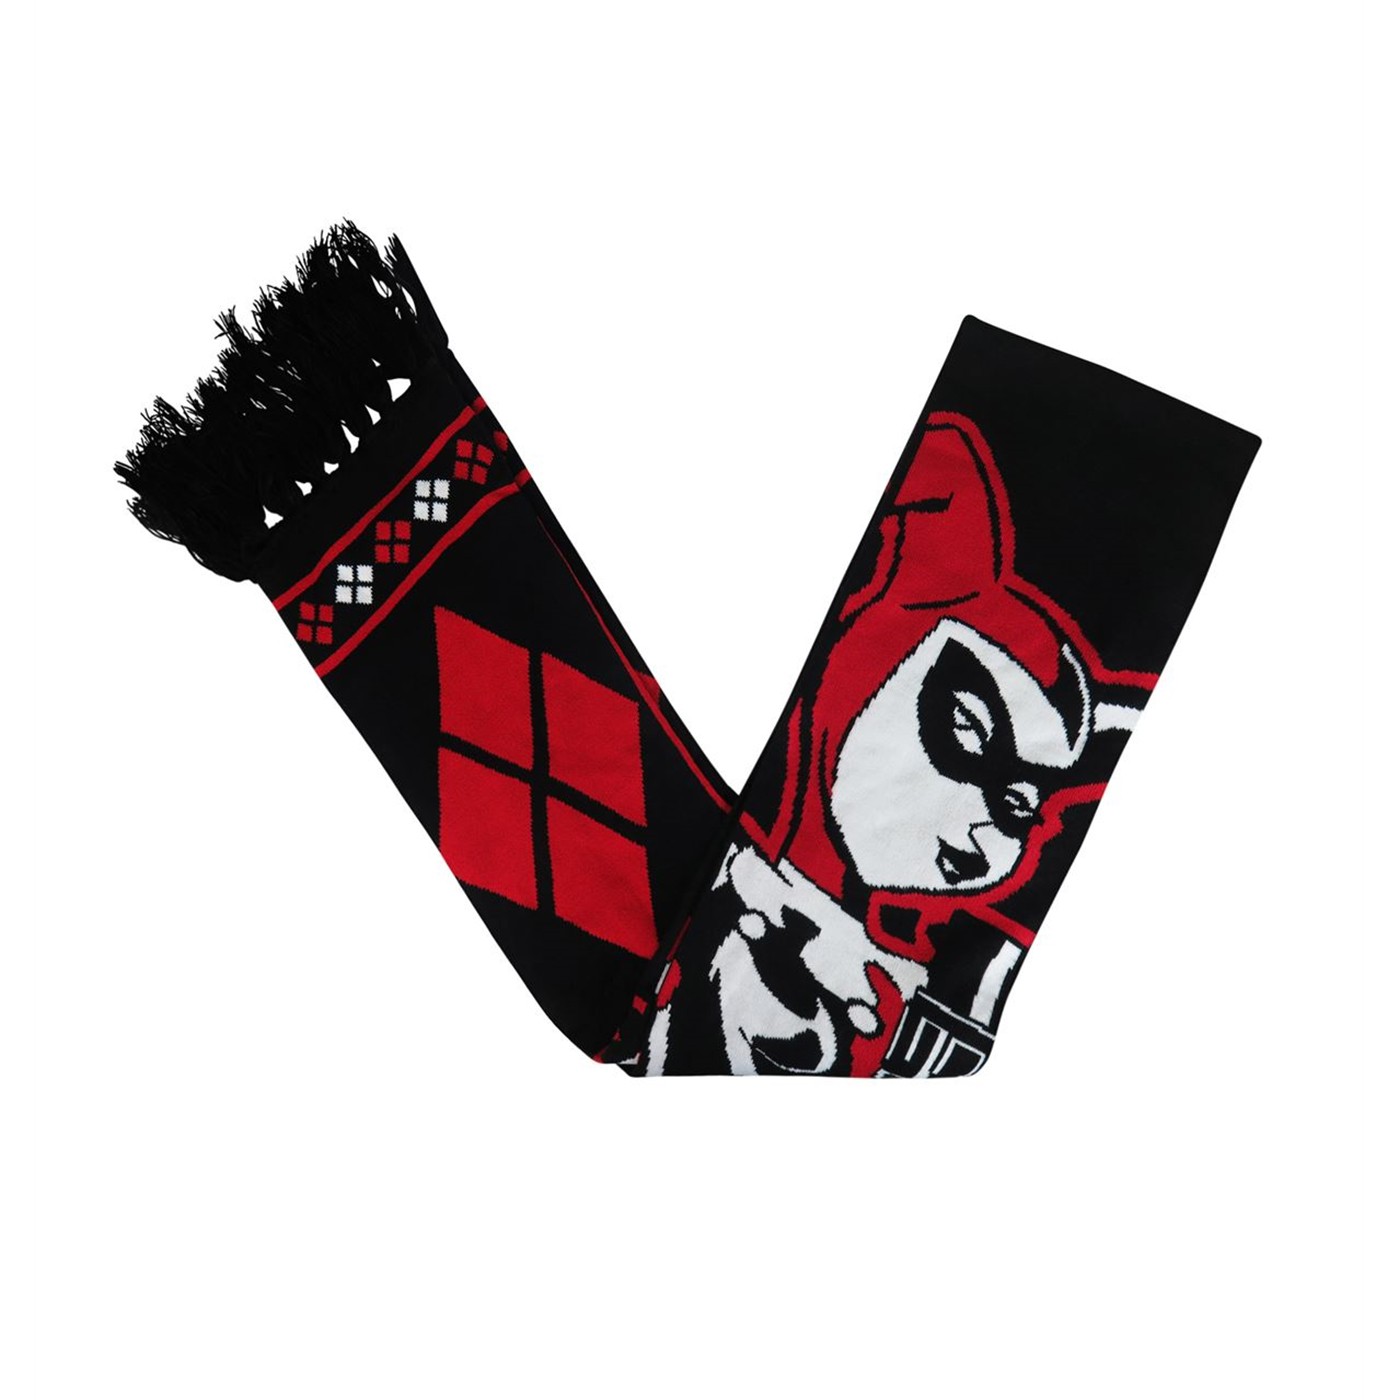 Harley Quinn Image and Symbol Scarf